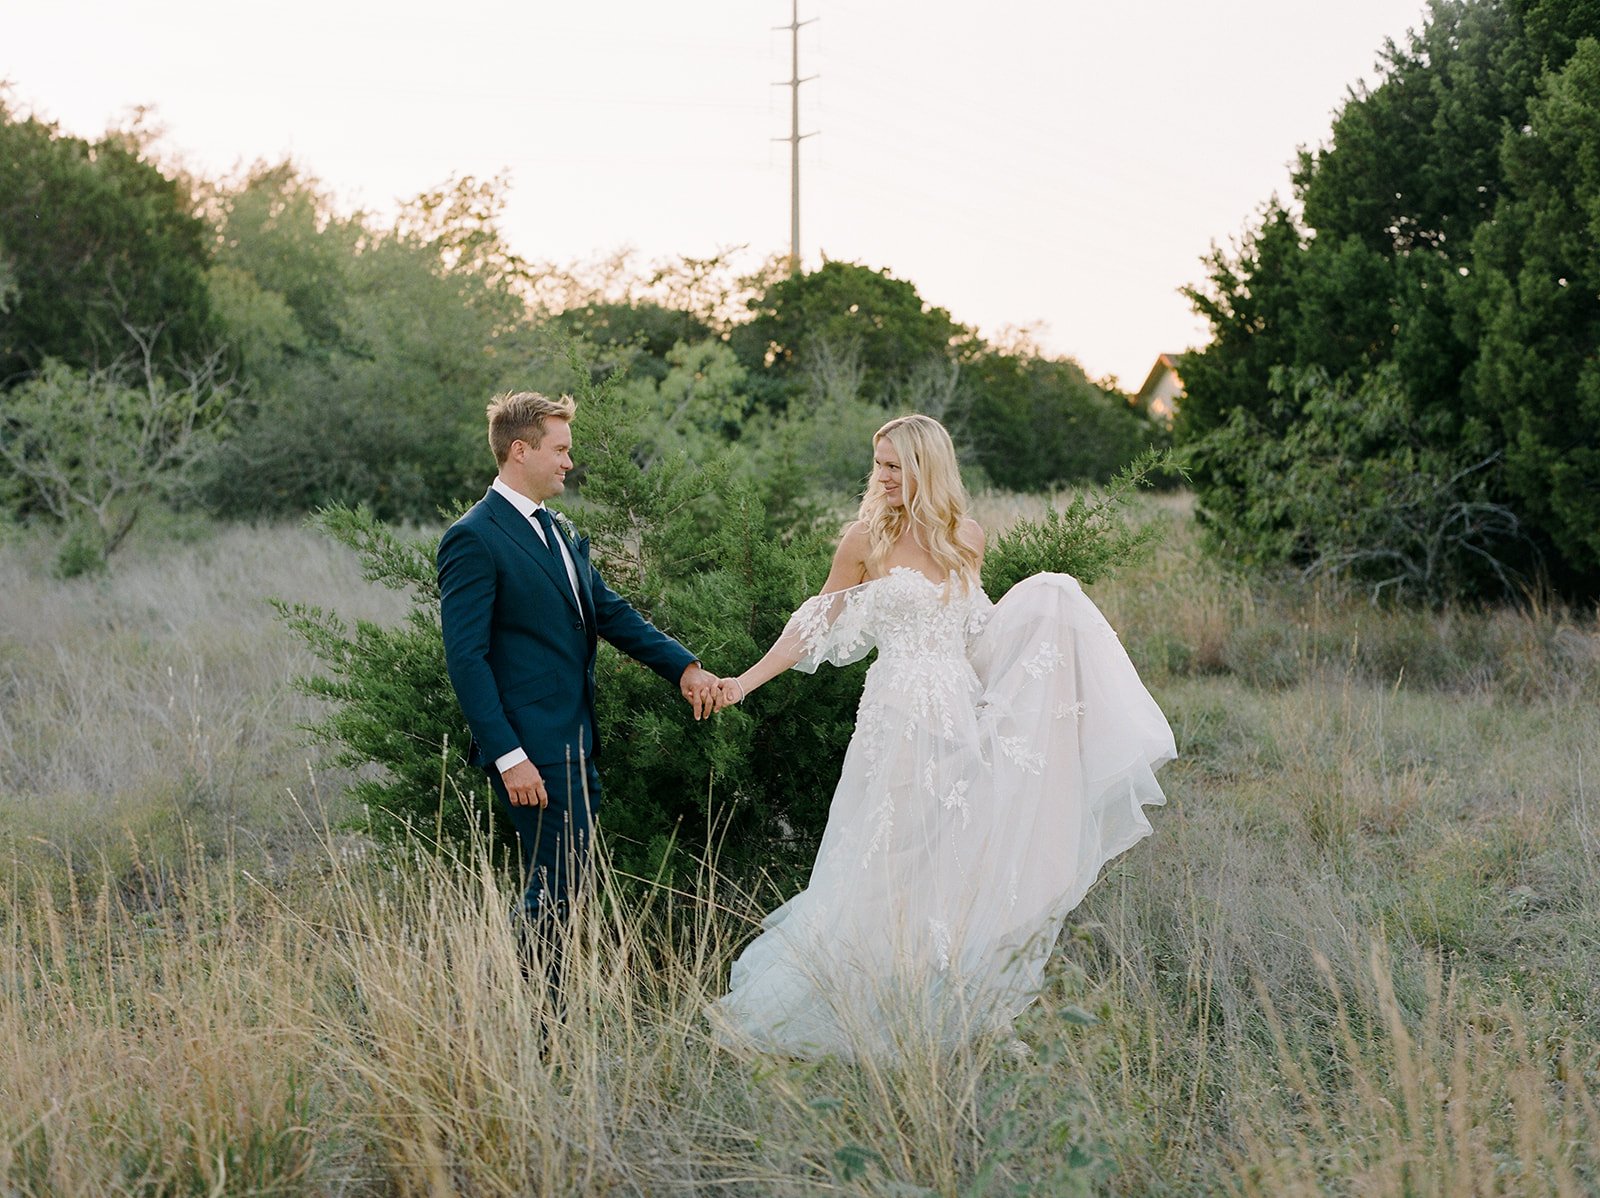 Best-Austin-Wedding-Photographers-Elopement-Film-35mm-Asheville-Santa-Barbara-Backyard-105.jpg